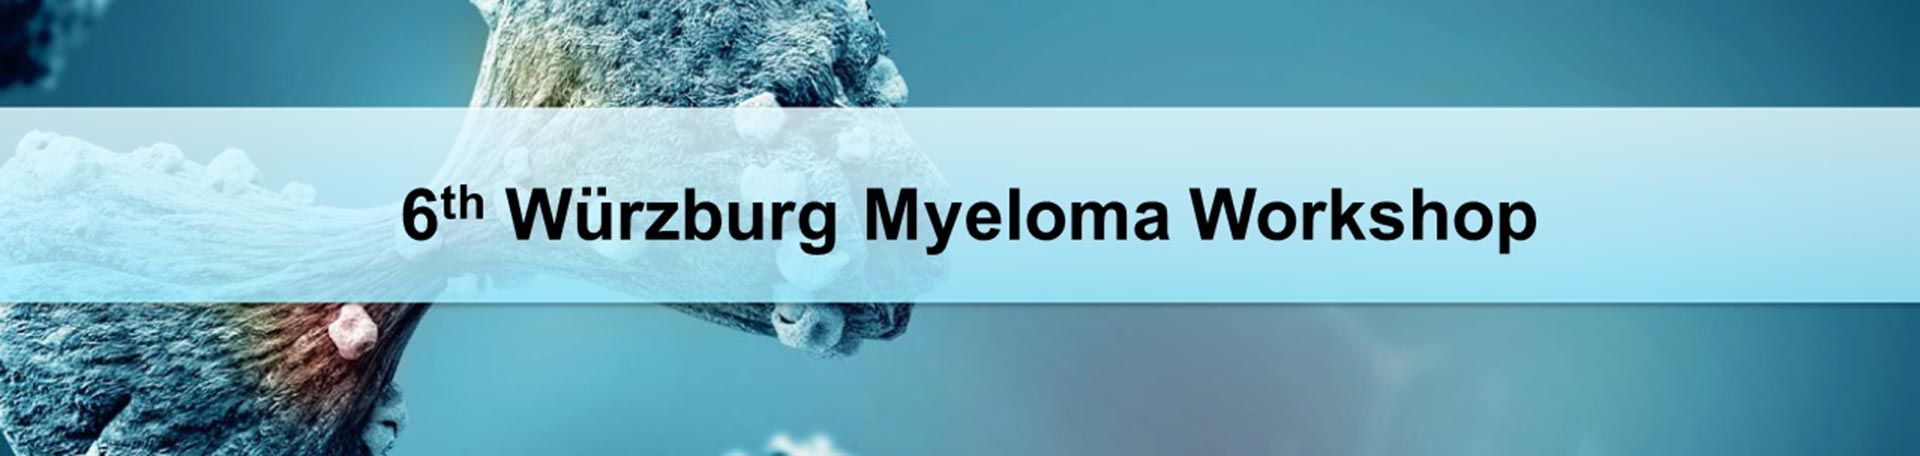 Symboldbild mit Aufschrift 6th Würzburg Myeloma Workshop